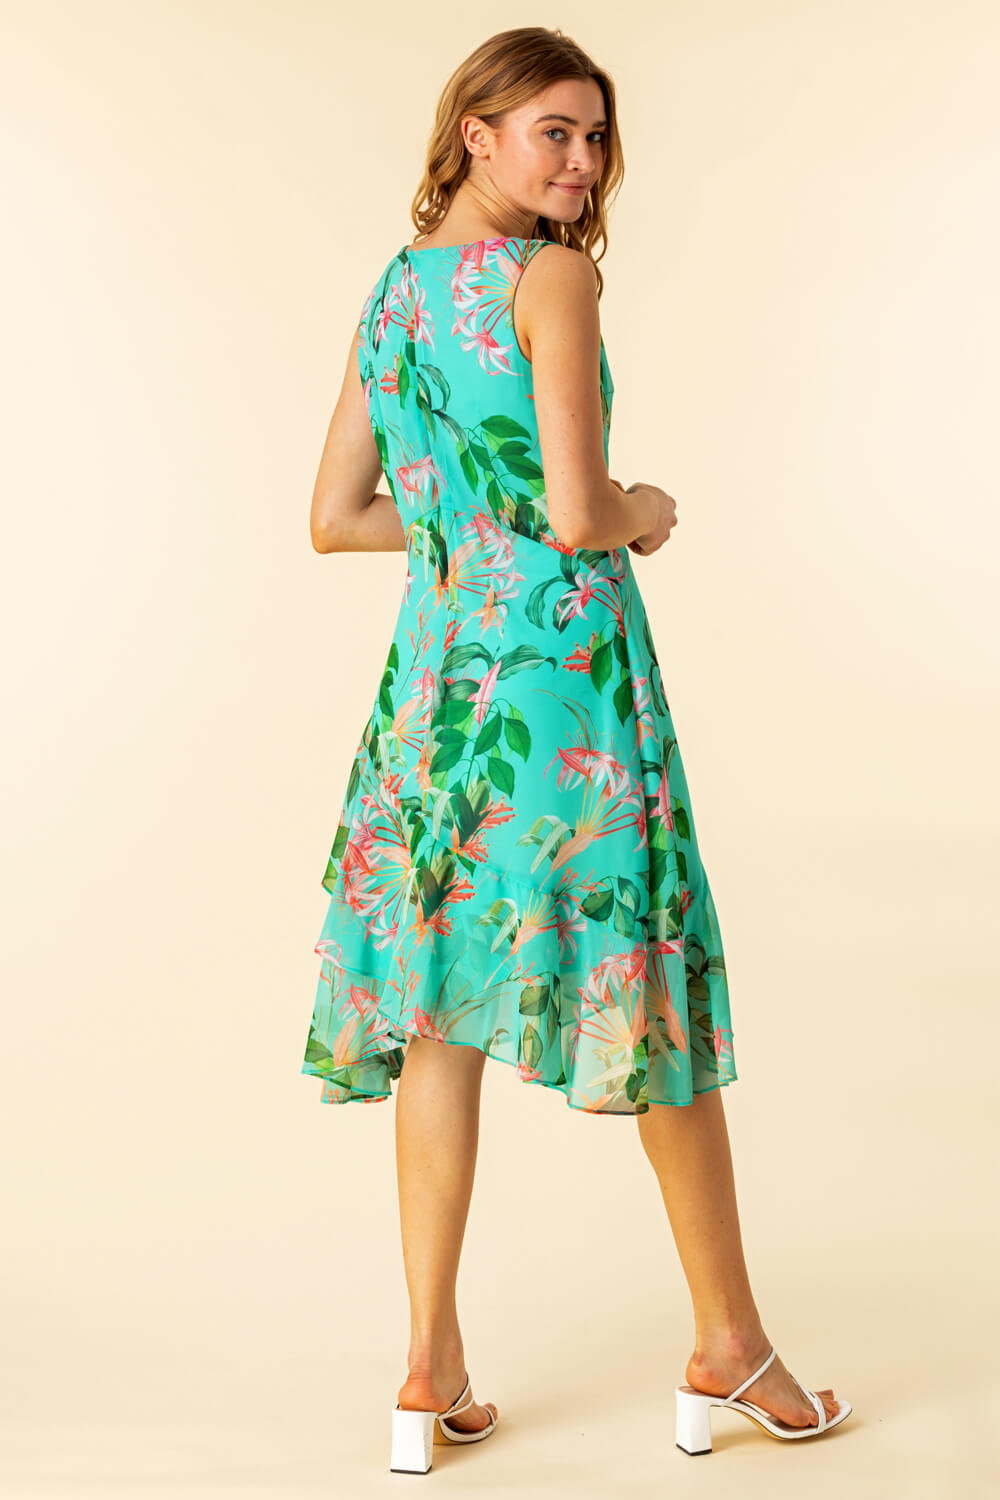 Turquoise Tropical Print Chiffon Dress, Image 2 of 4